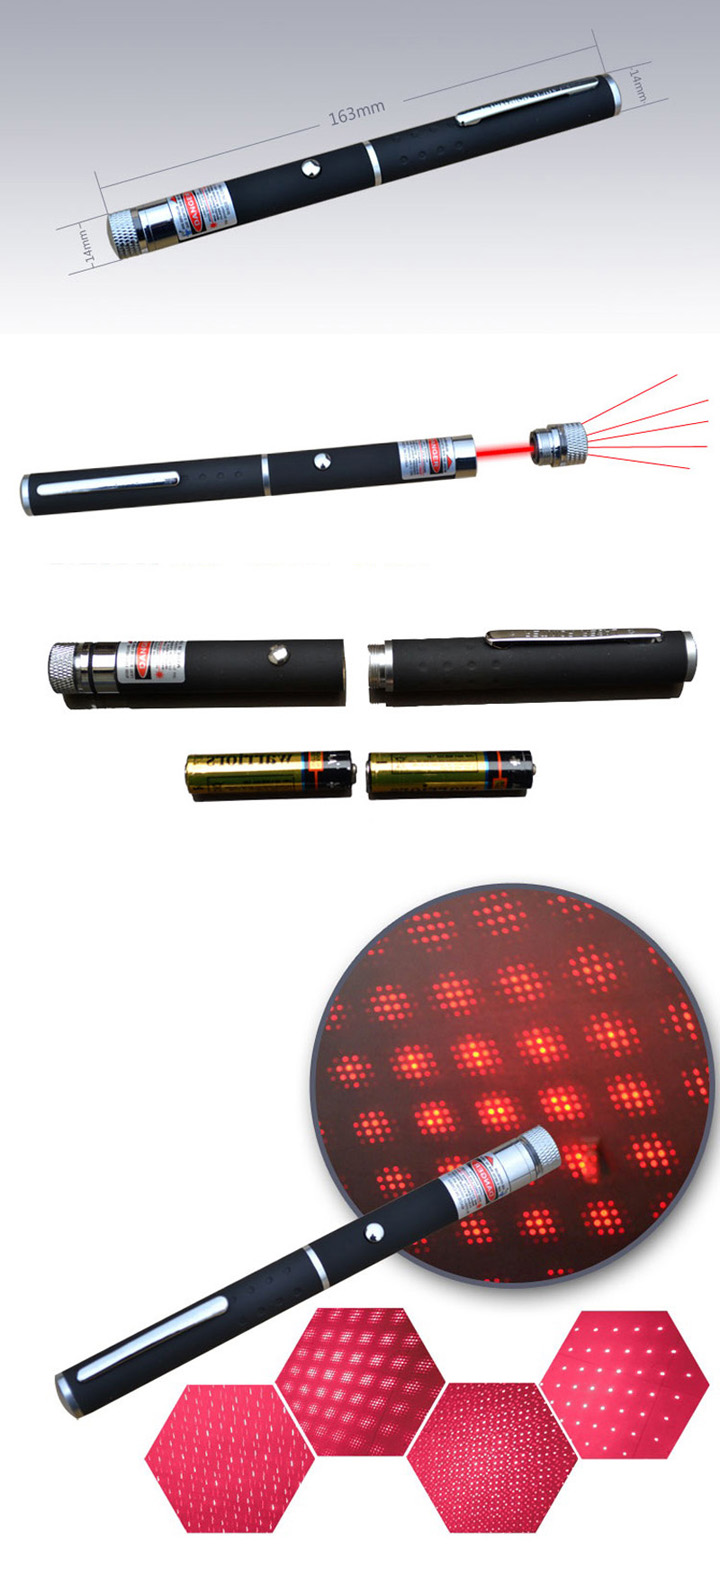 stylo laser rouge avec motif